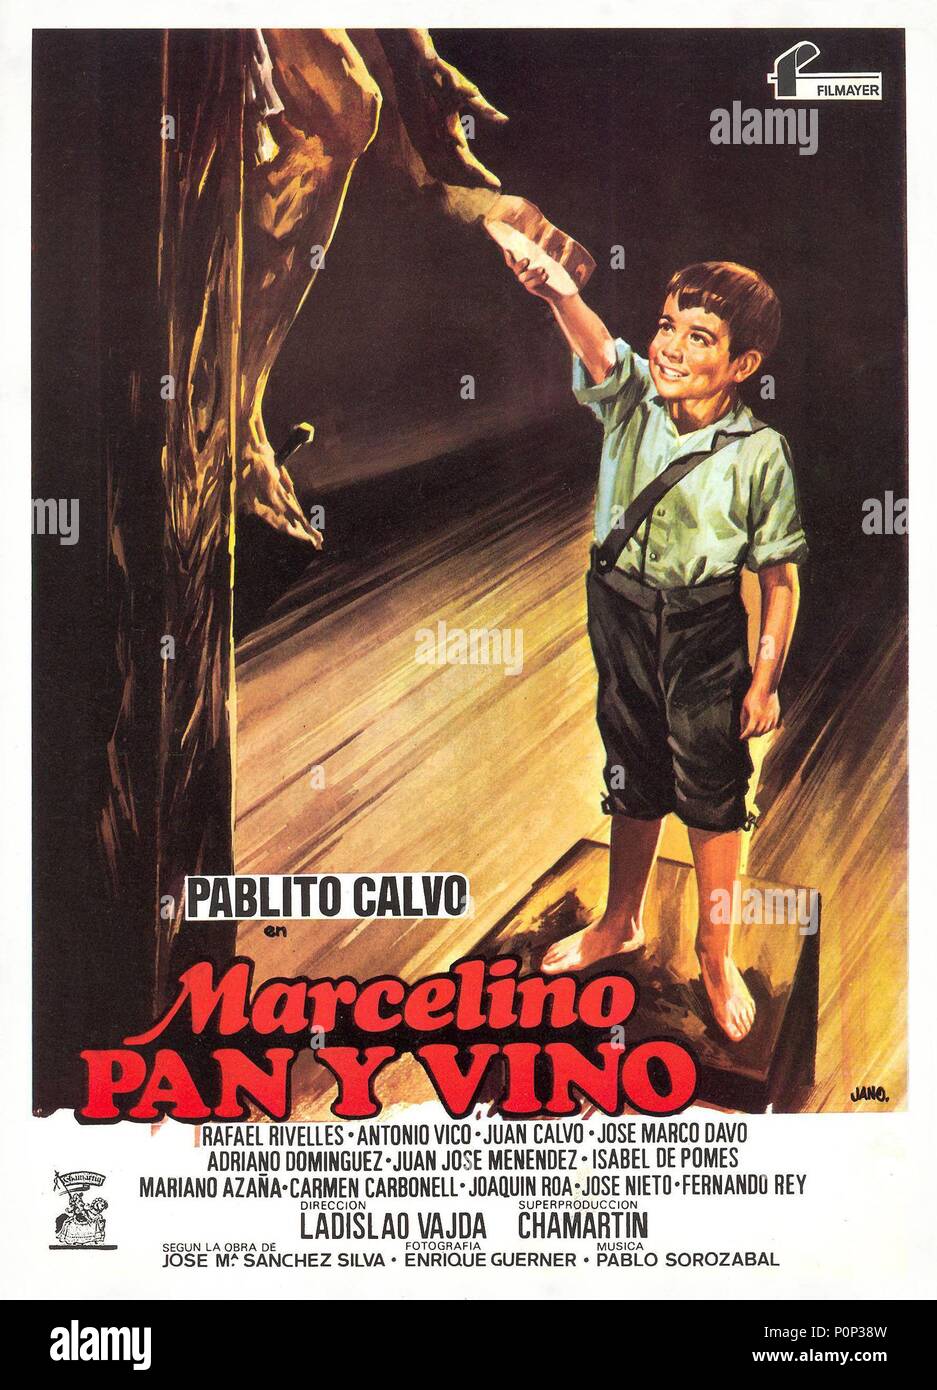 Original Film Title: MARCELINO PAN Y VINO. English Title: THE MIRACLE OF  MARCELINO. Film Director: LADISLAO VAJDA. Year: 1955. Credit: CHAMARTIN  PRODUCCIONES Y DISTRIBUCION / Album Stock Photo - Alamy